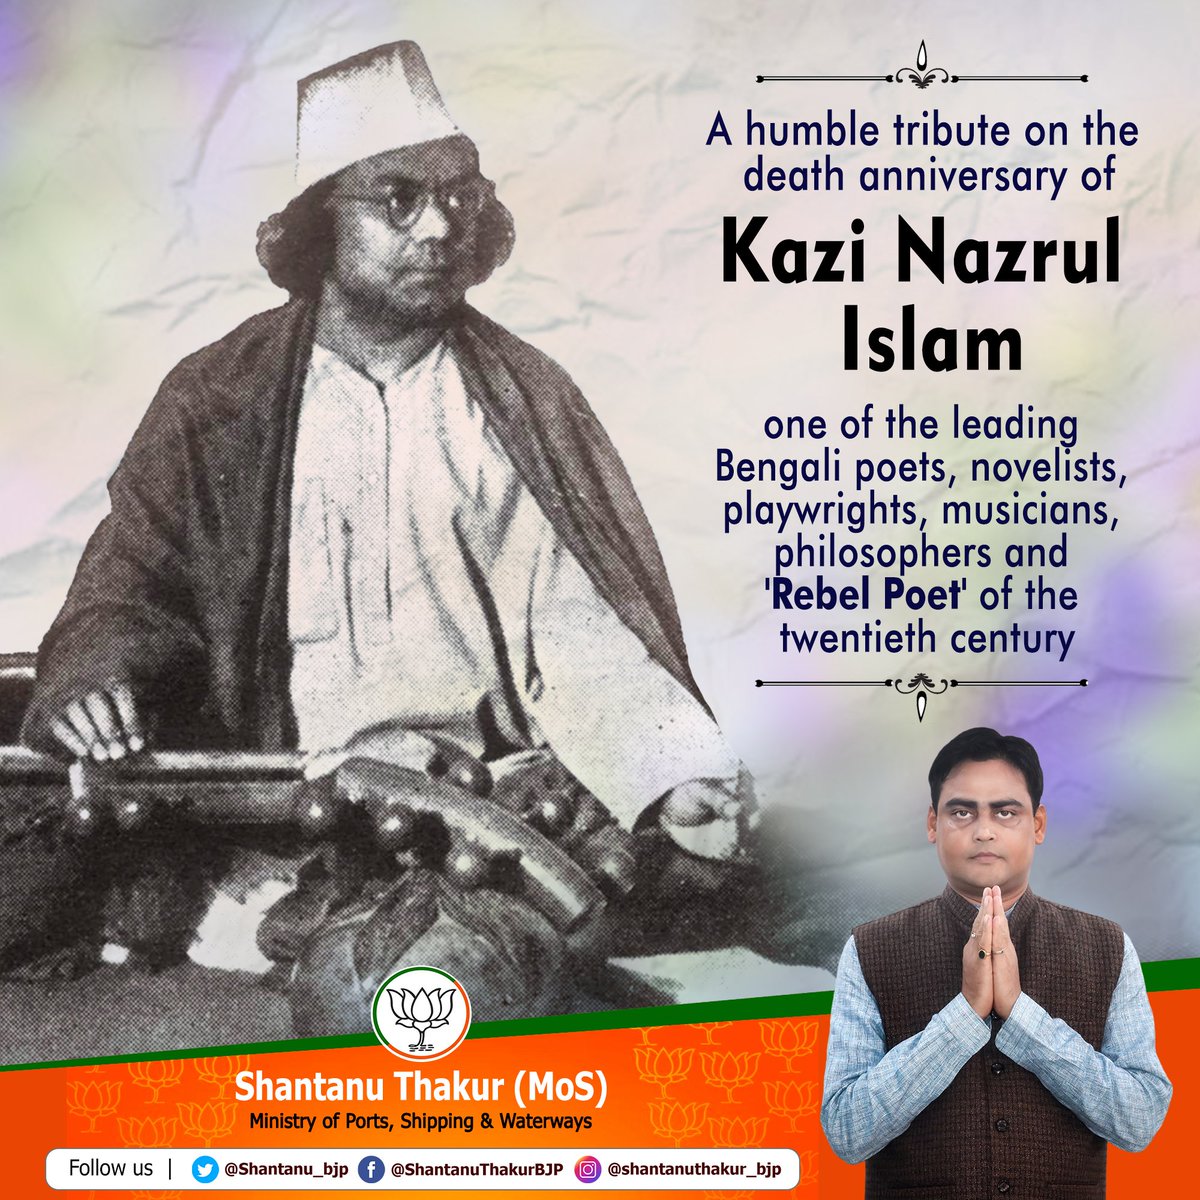 A humble tribute on the death anniversary of Kazi Nazrul Islam, one of the leading Bengali poets, novelists, playwrights, musicians, philosophers and 'Rebel Poet' of the twentieth century.

#KaziNazrulIslam